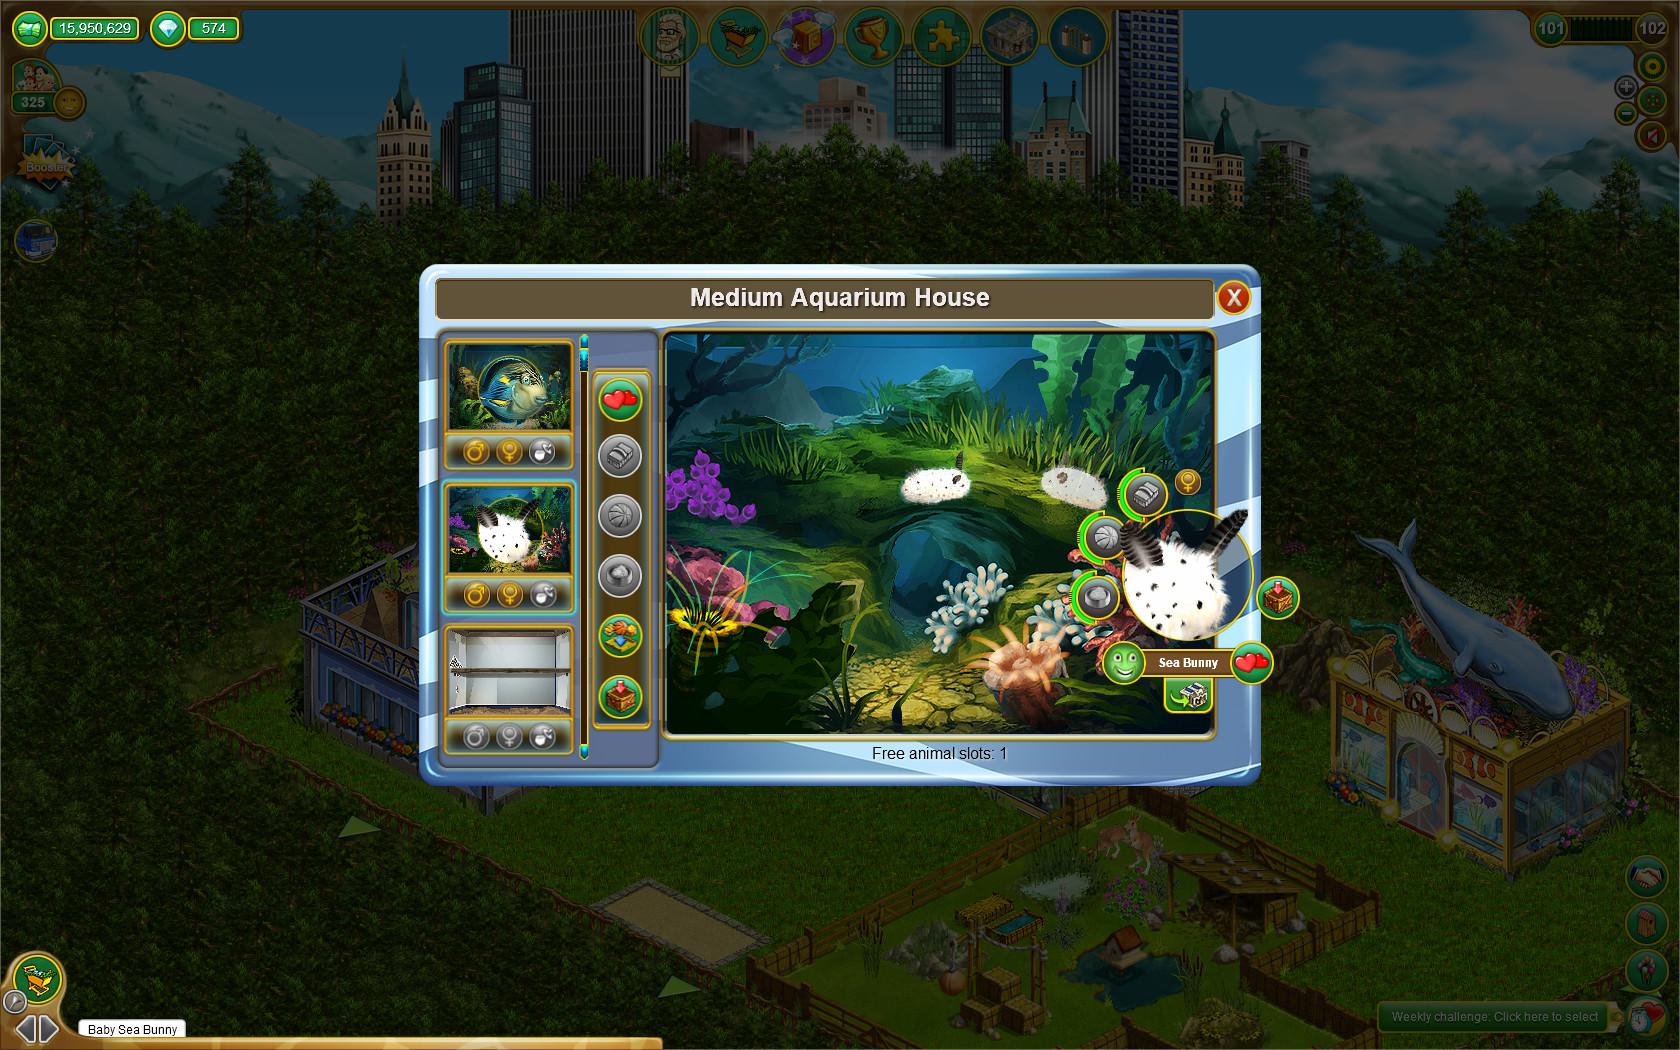 Screenshot №11 from game My Free Zoo